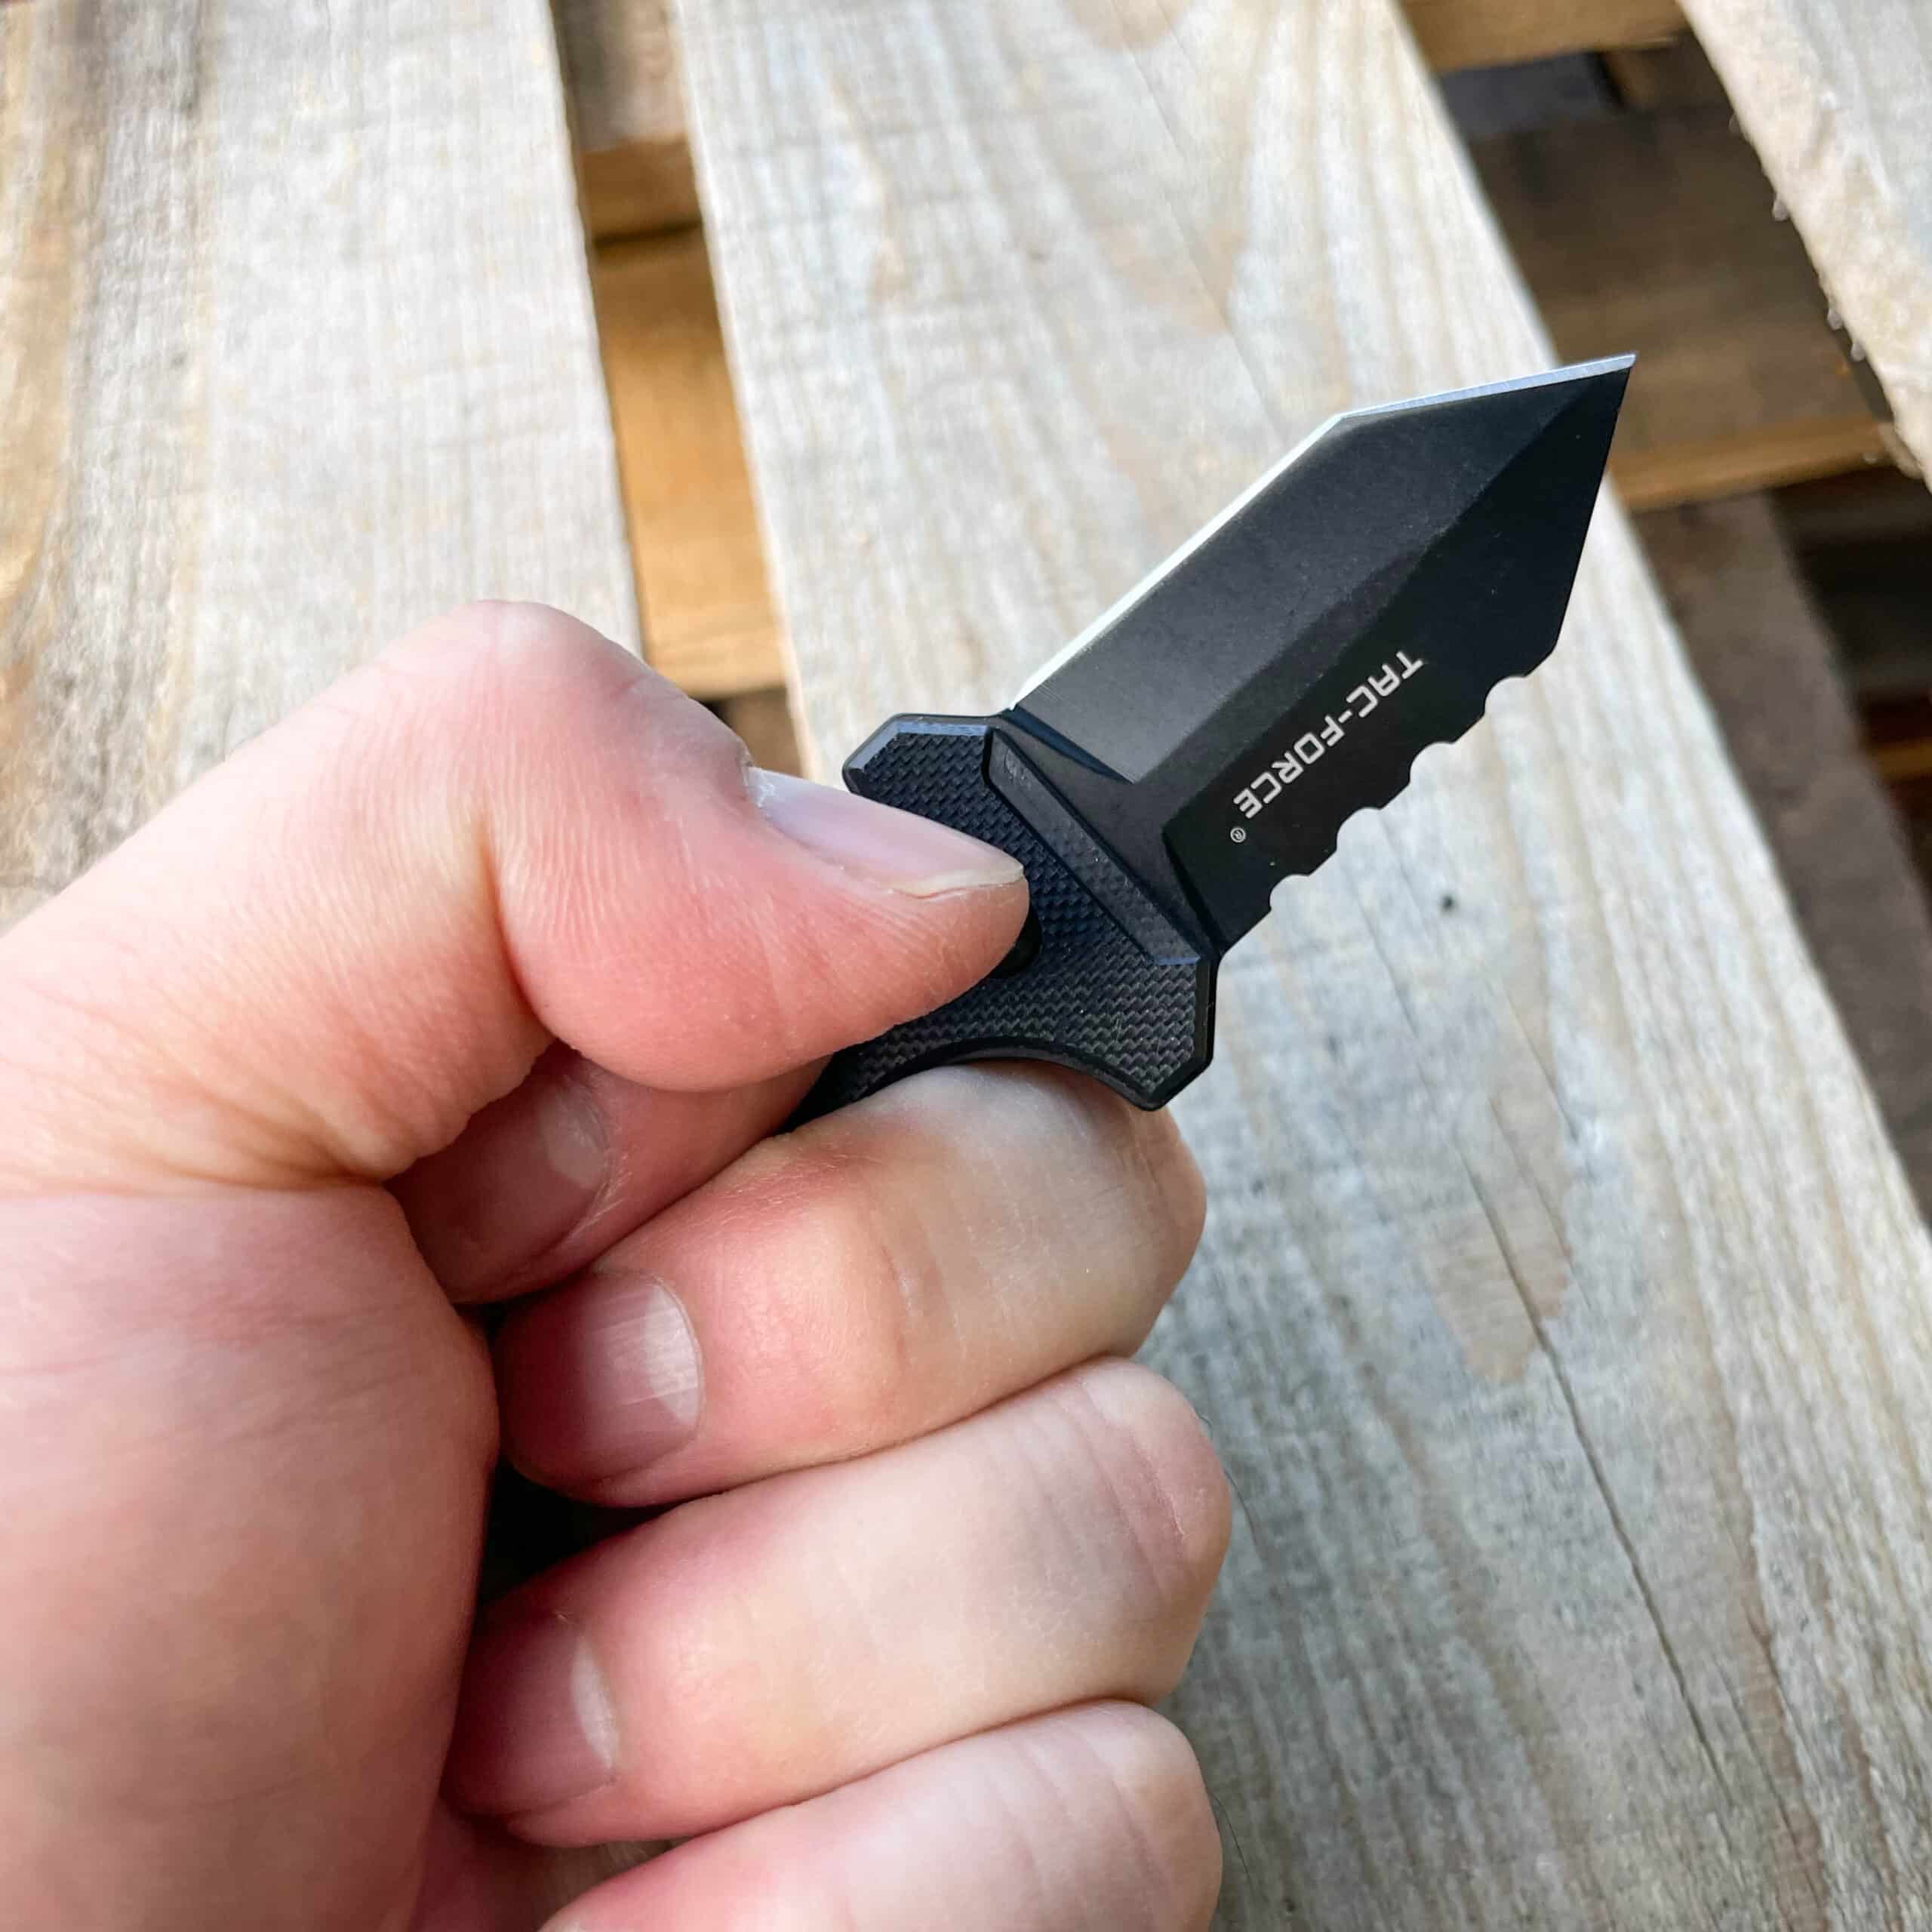 Militant Black Fixed Blade Neck Knife